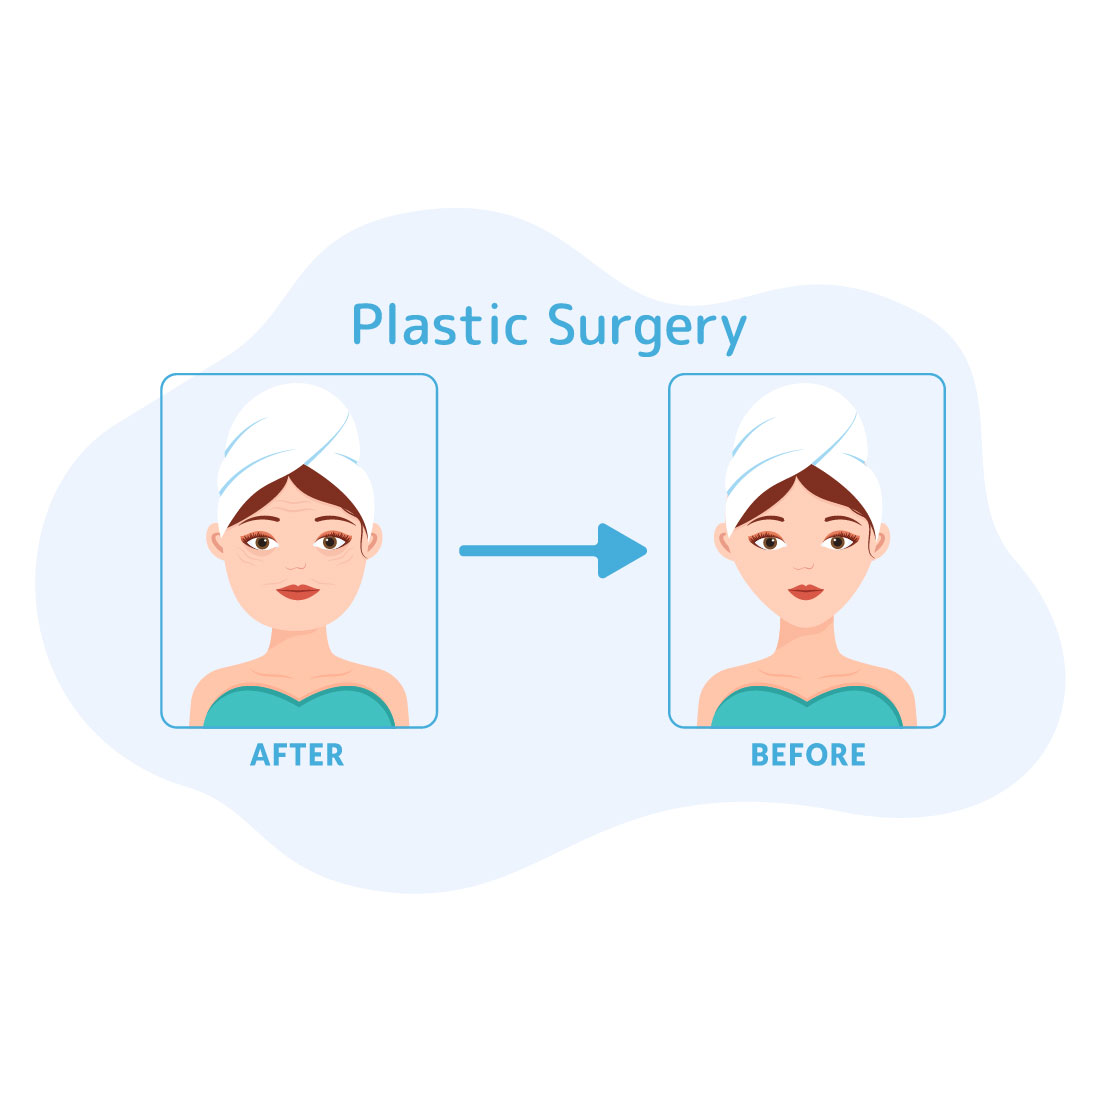 Plastic Surgery Flat Illustration cover image.